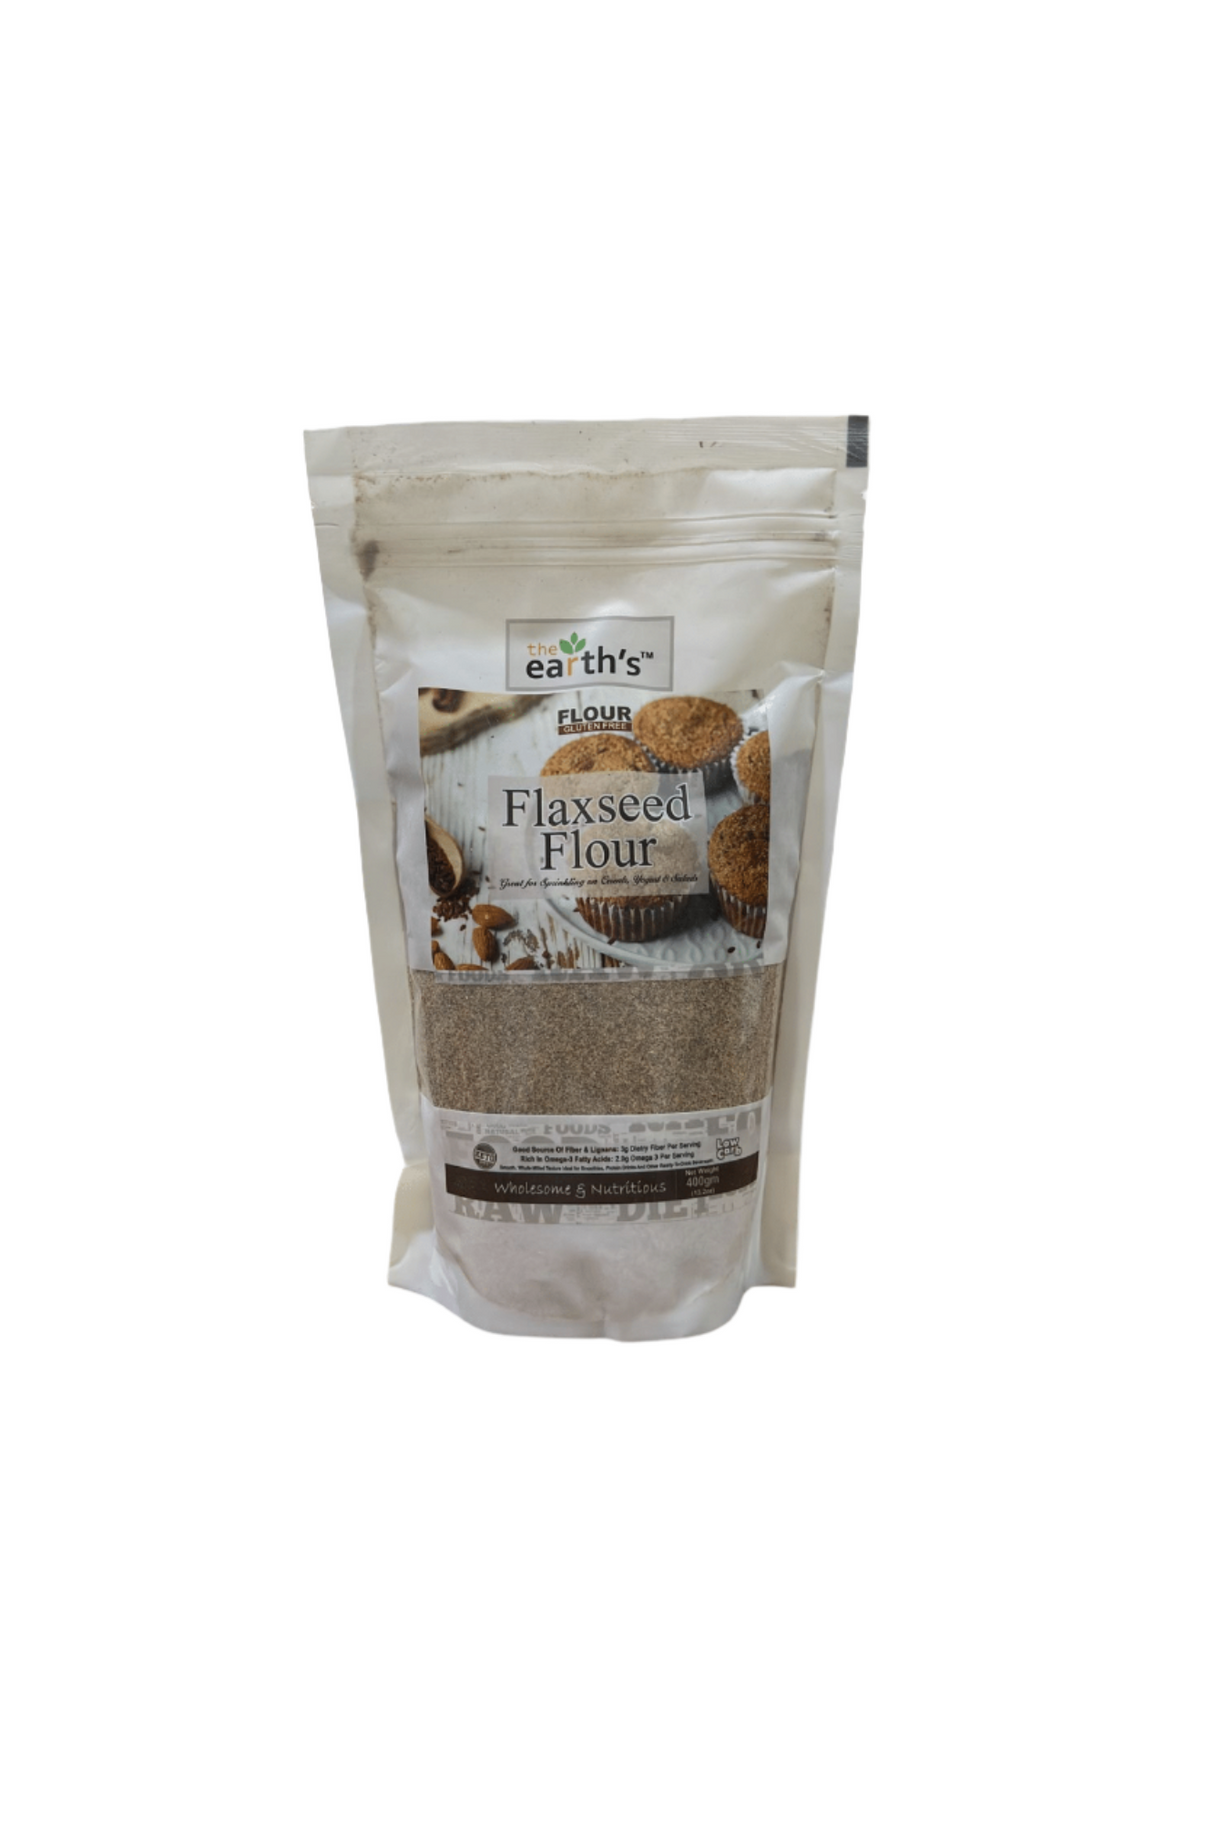 earths flaxseed flour 400g